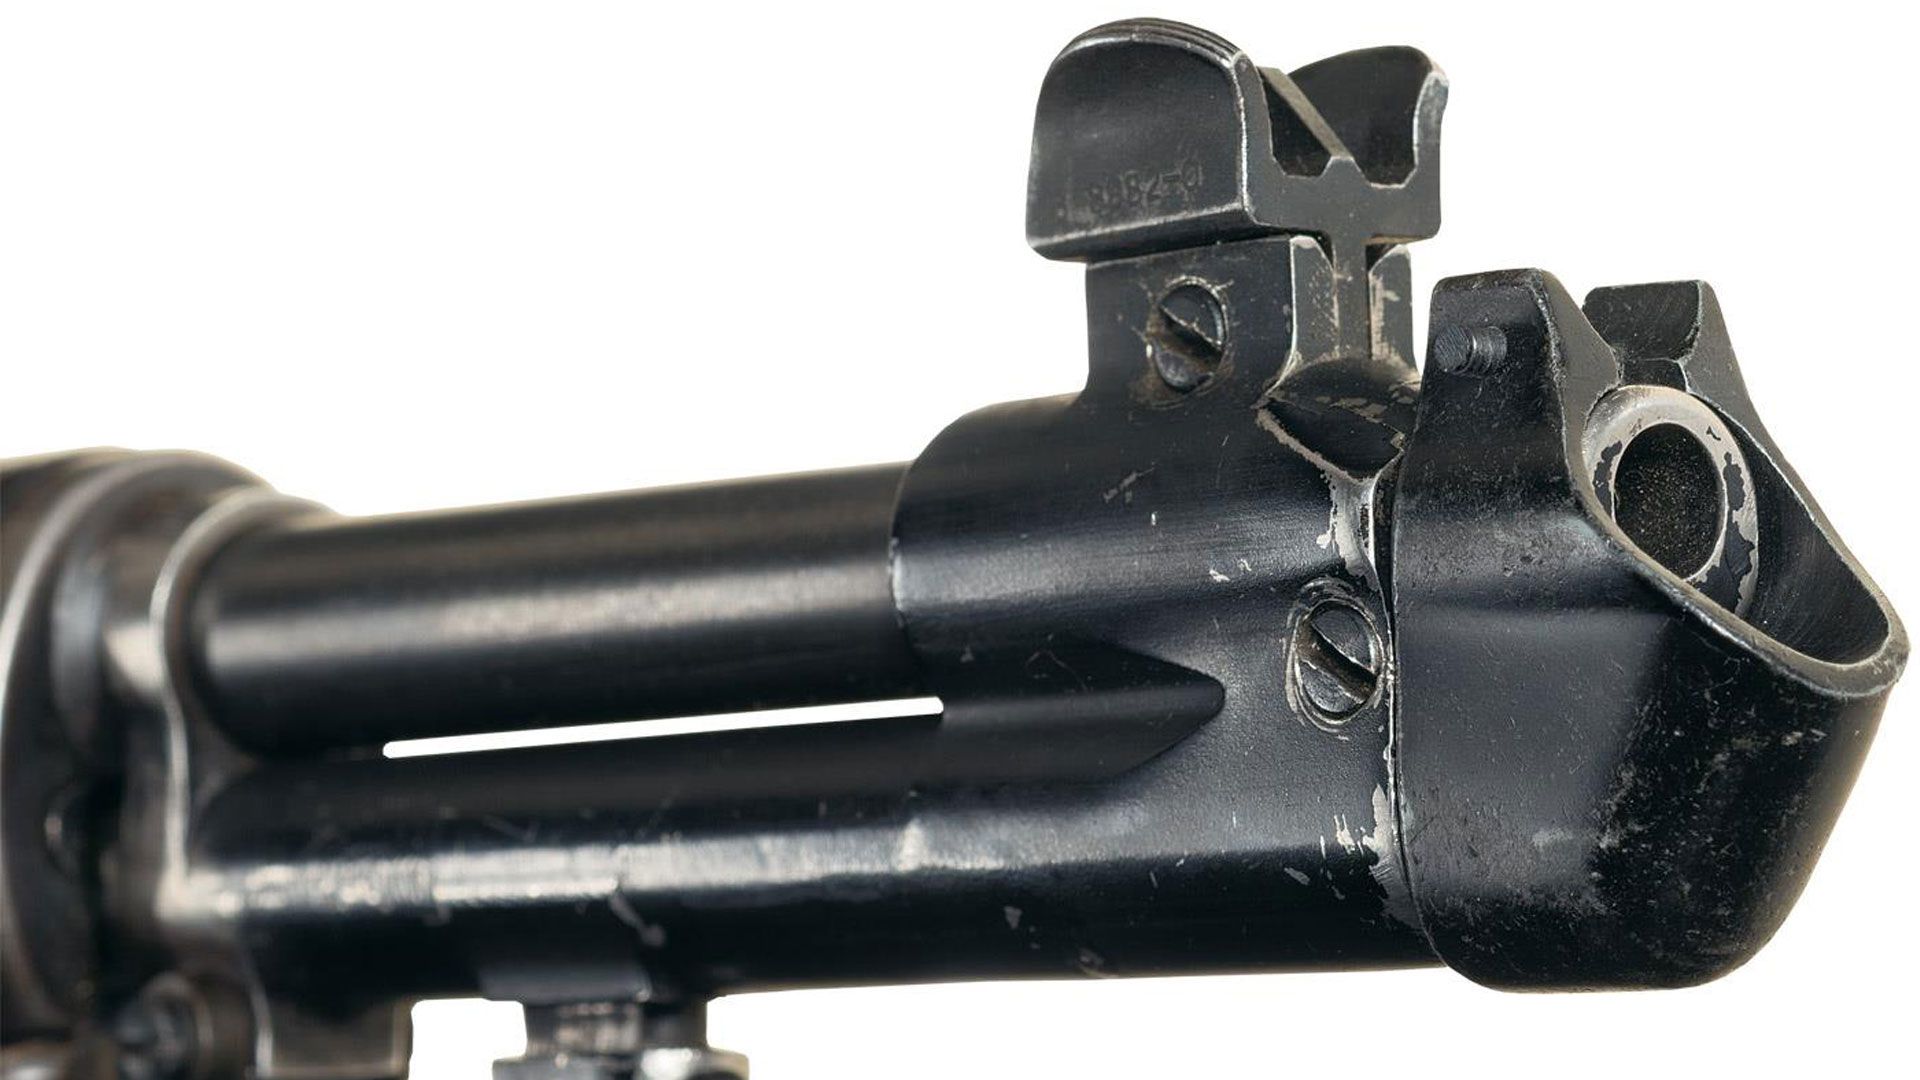 springfield-rifle-with-rare-blast-deflector